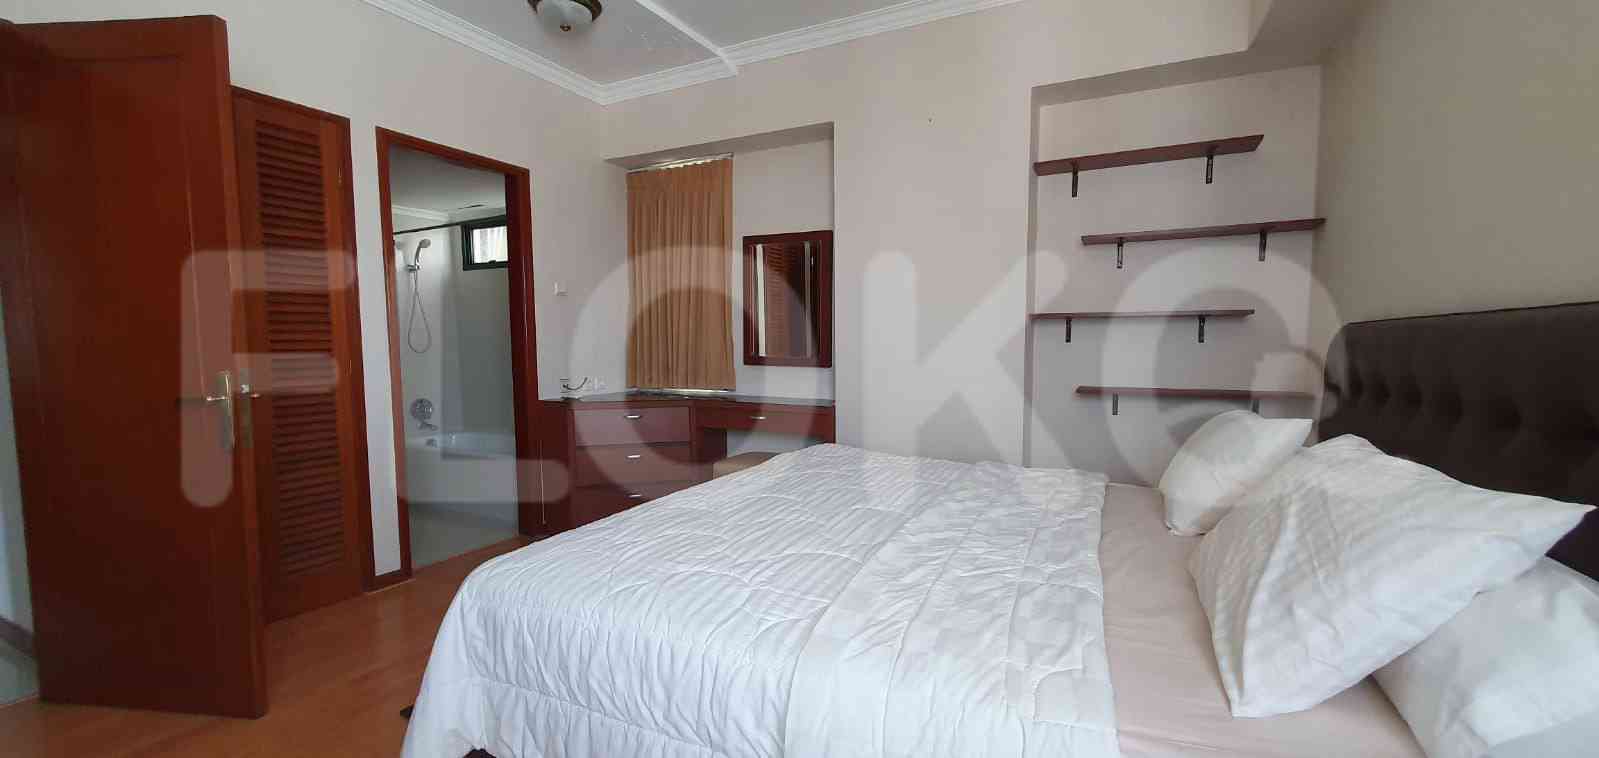 3 Bedroom on 27th Floor for Rent in Aryaduta Suites Semanggi - fsu7eb 5